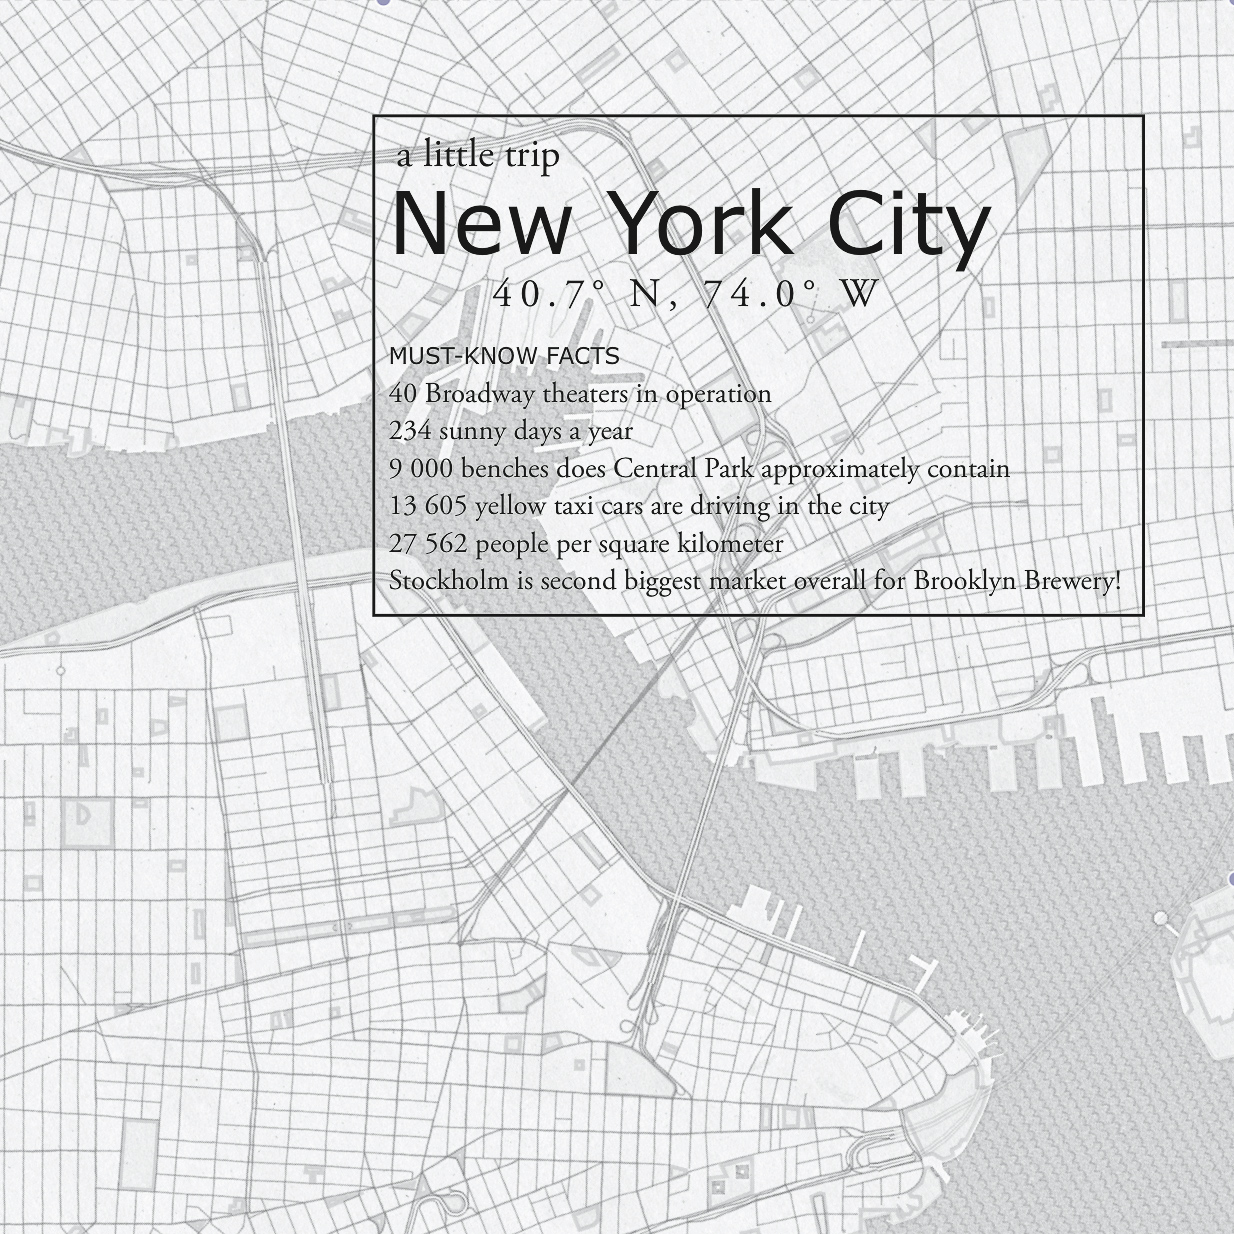 New York NYC printable mini guide city guide hello getaway